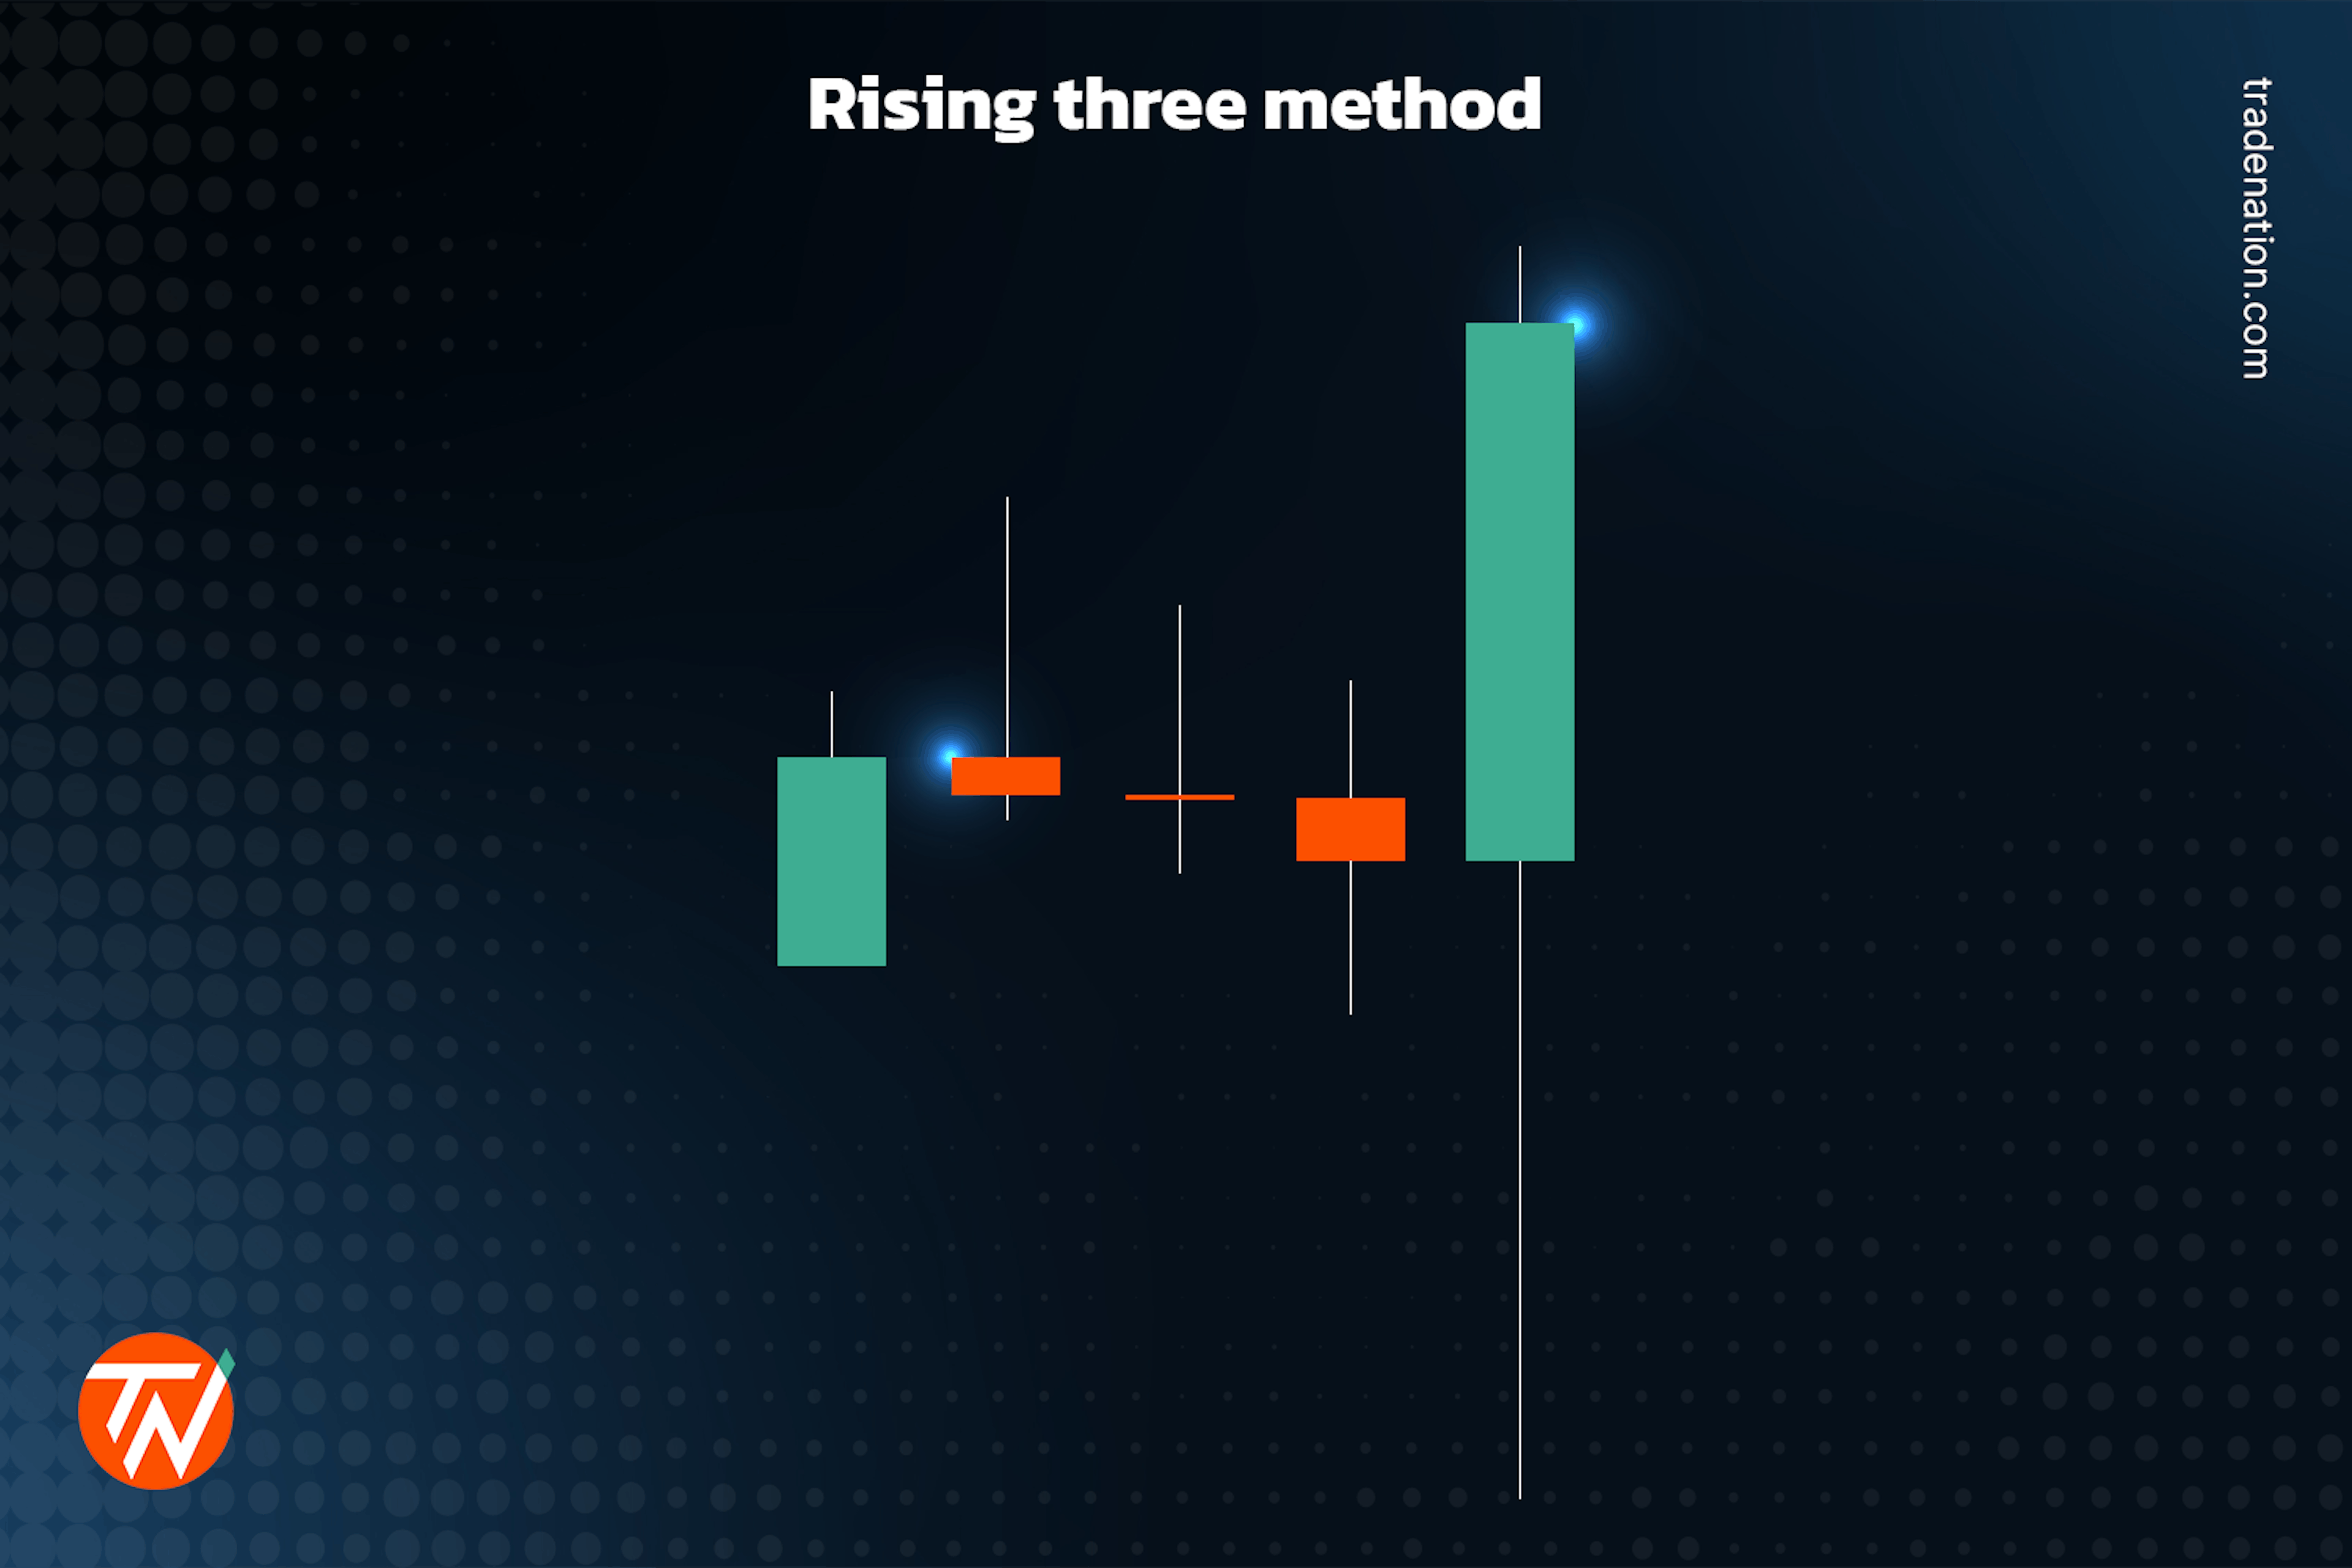 Rising three method candlestick pattern